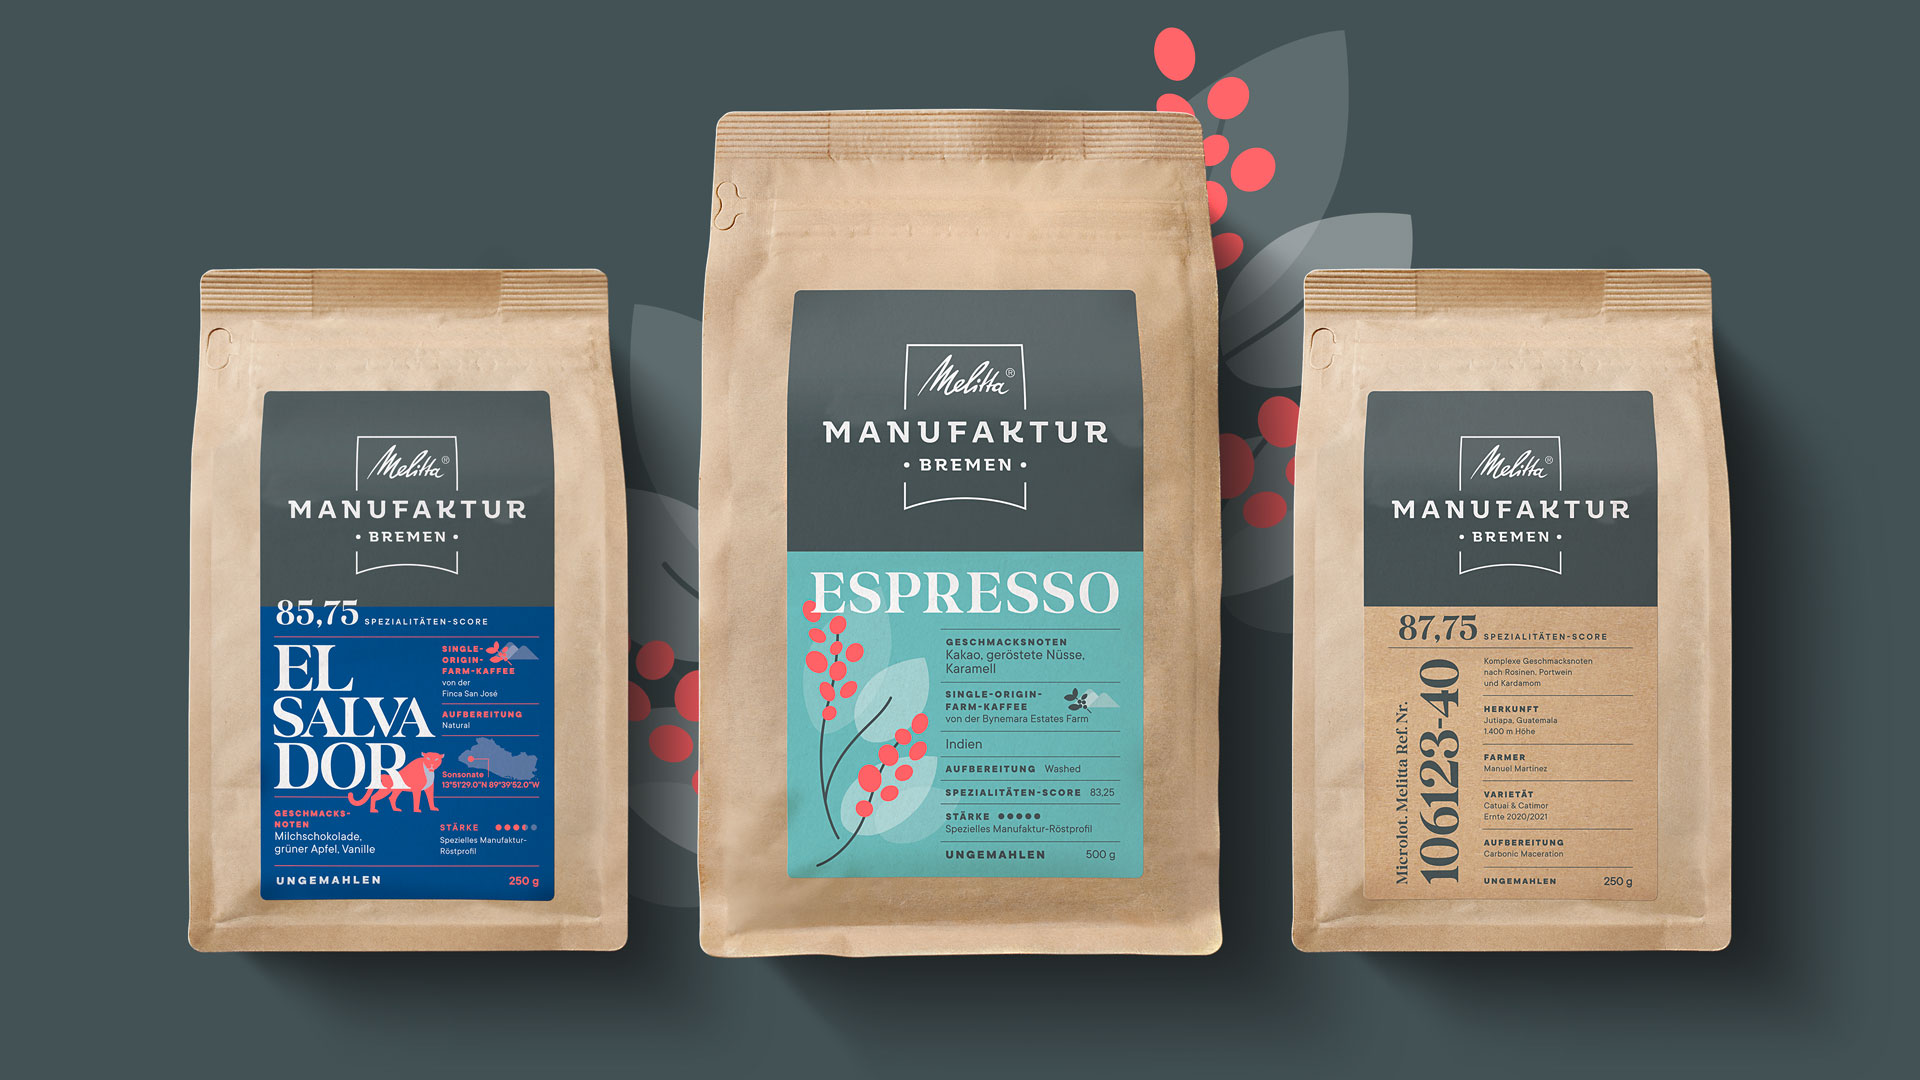 Hajok Creates Packaging Design for Melitta Manufaktur Coffees